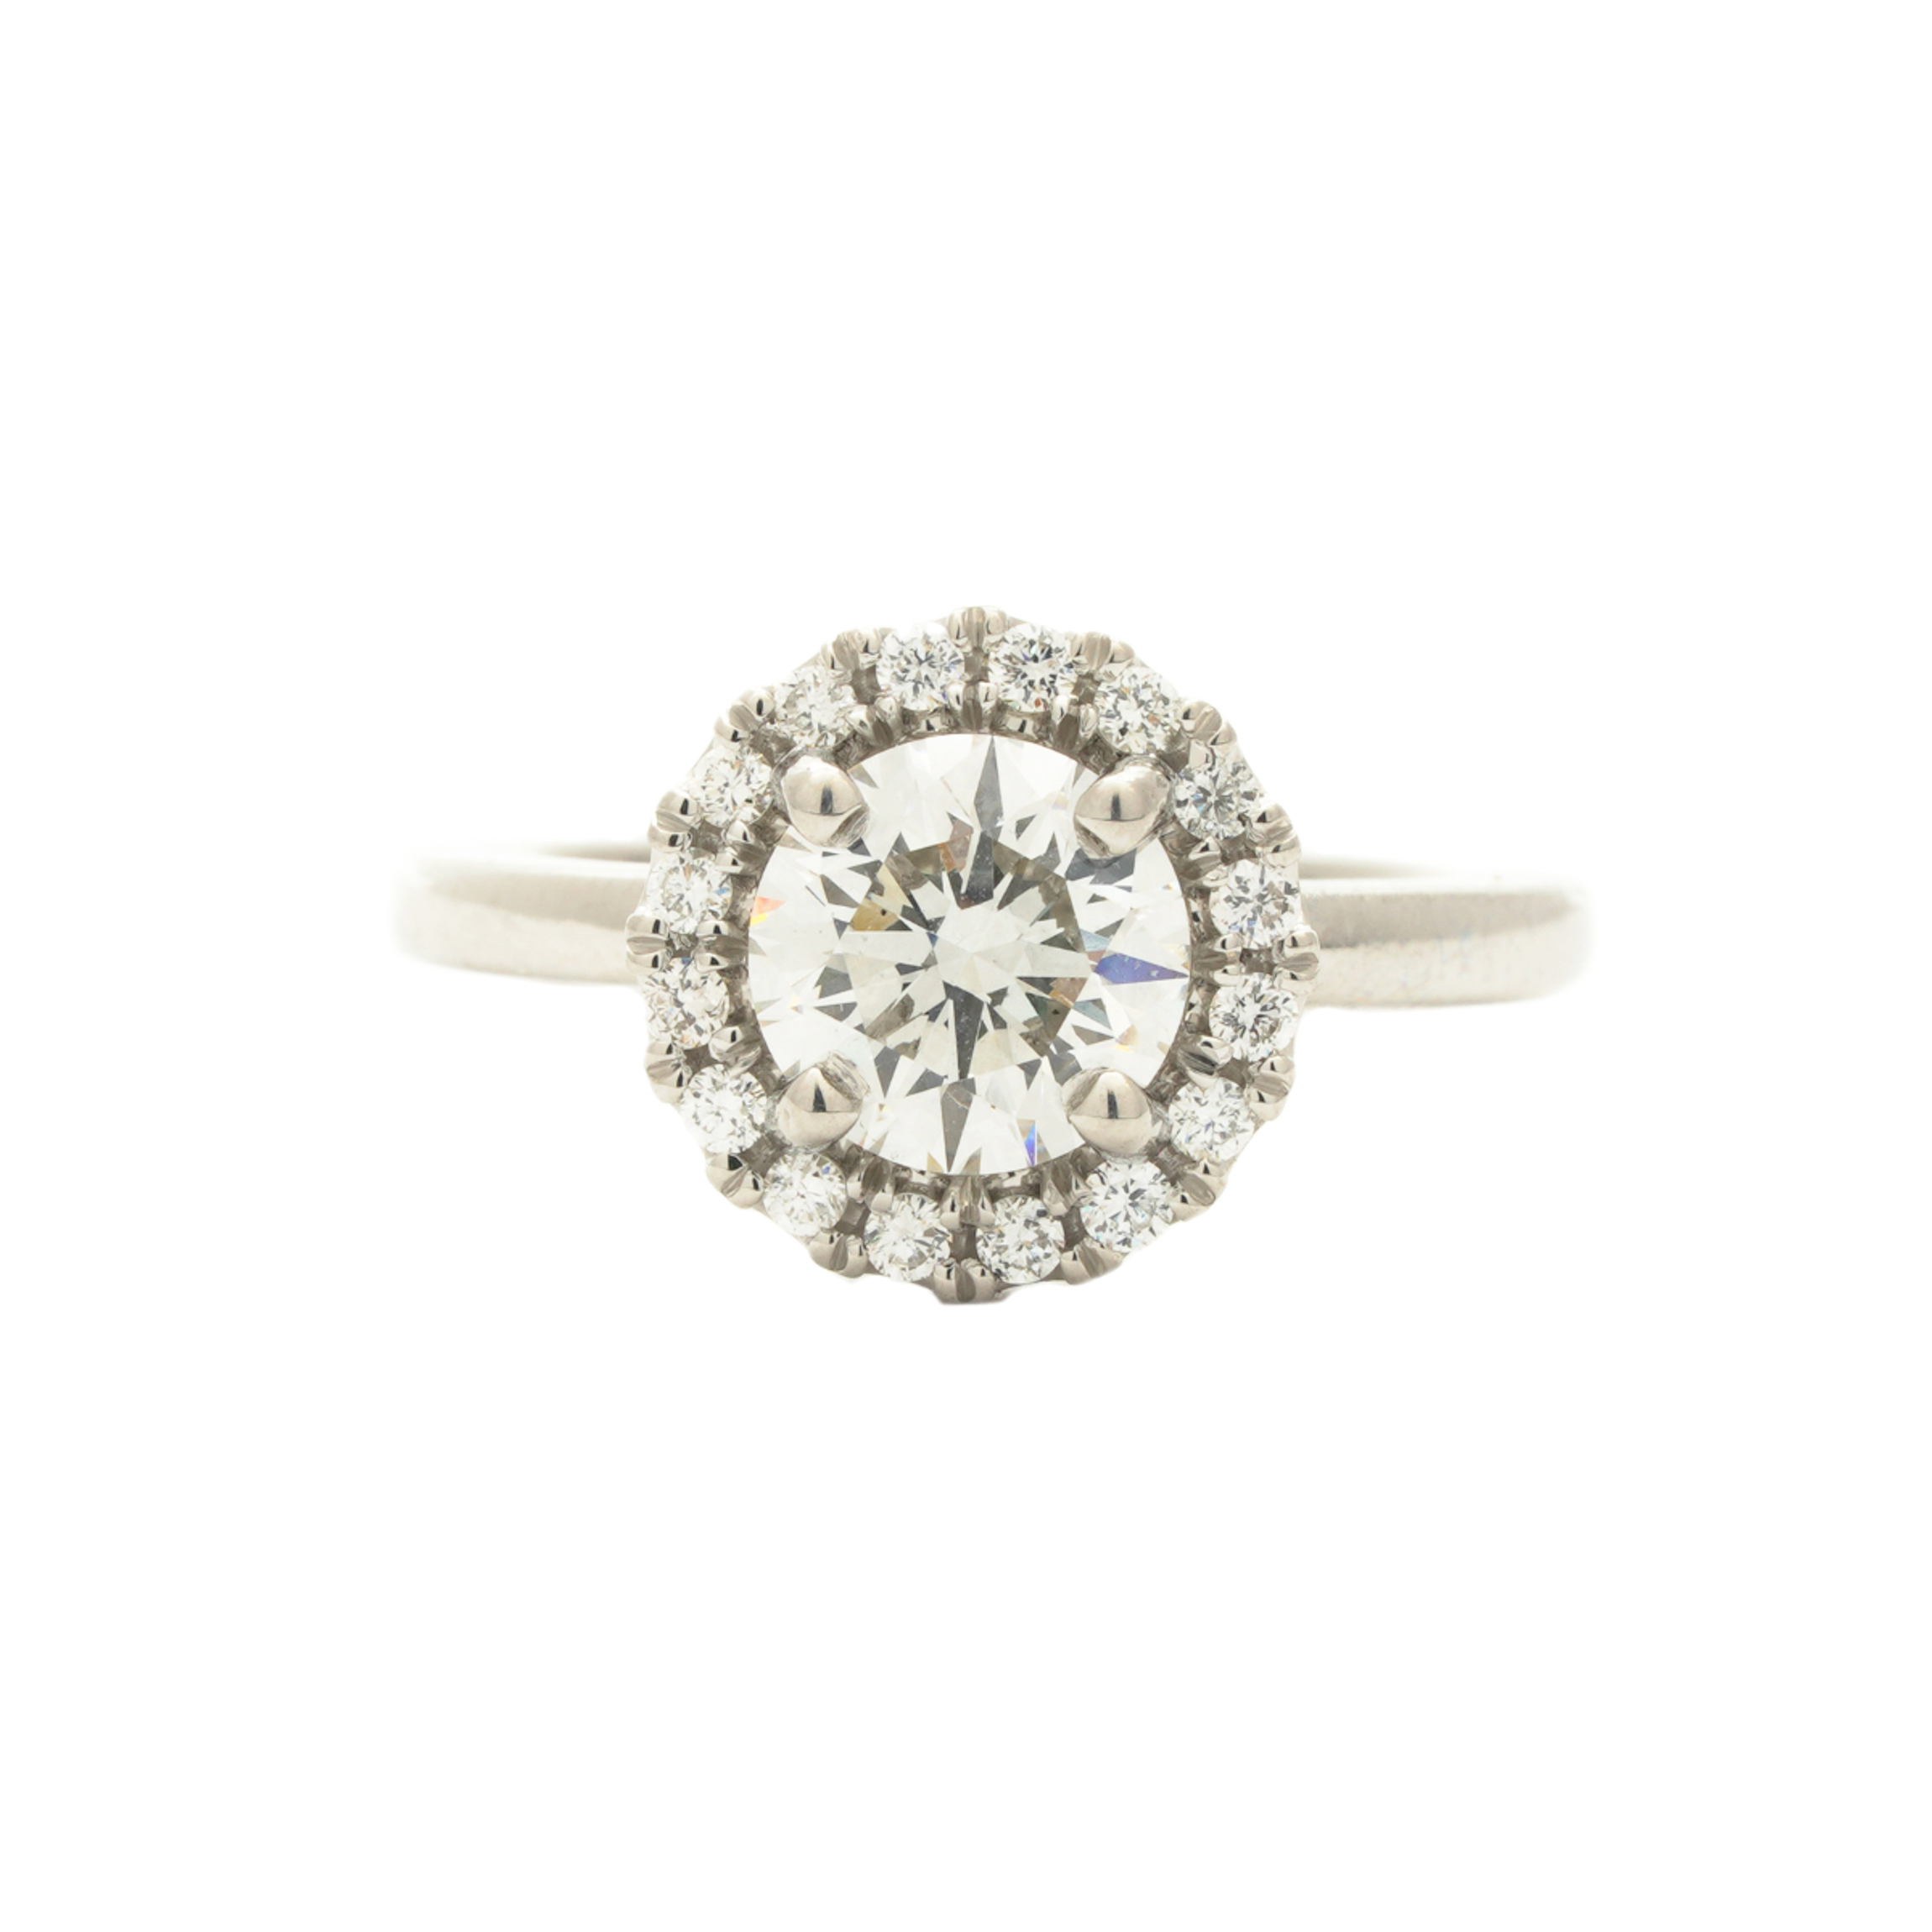 Petite Halo Diamond Ring - Solari & Co